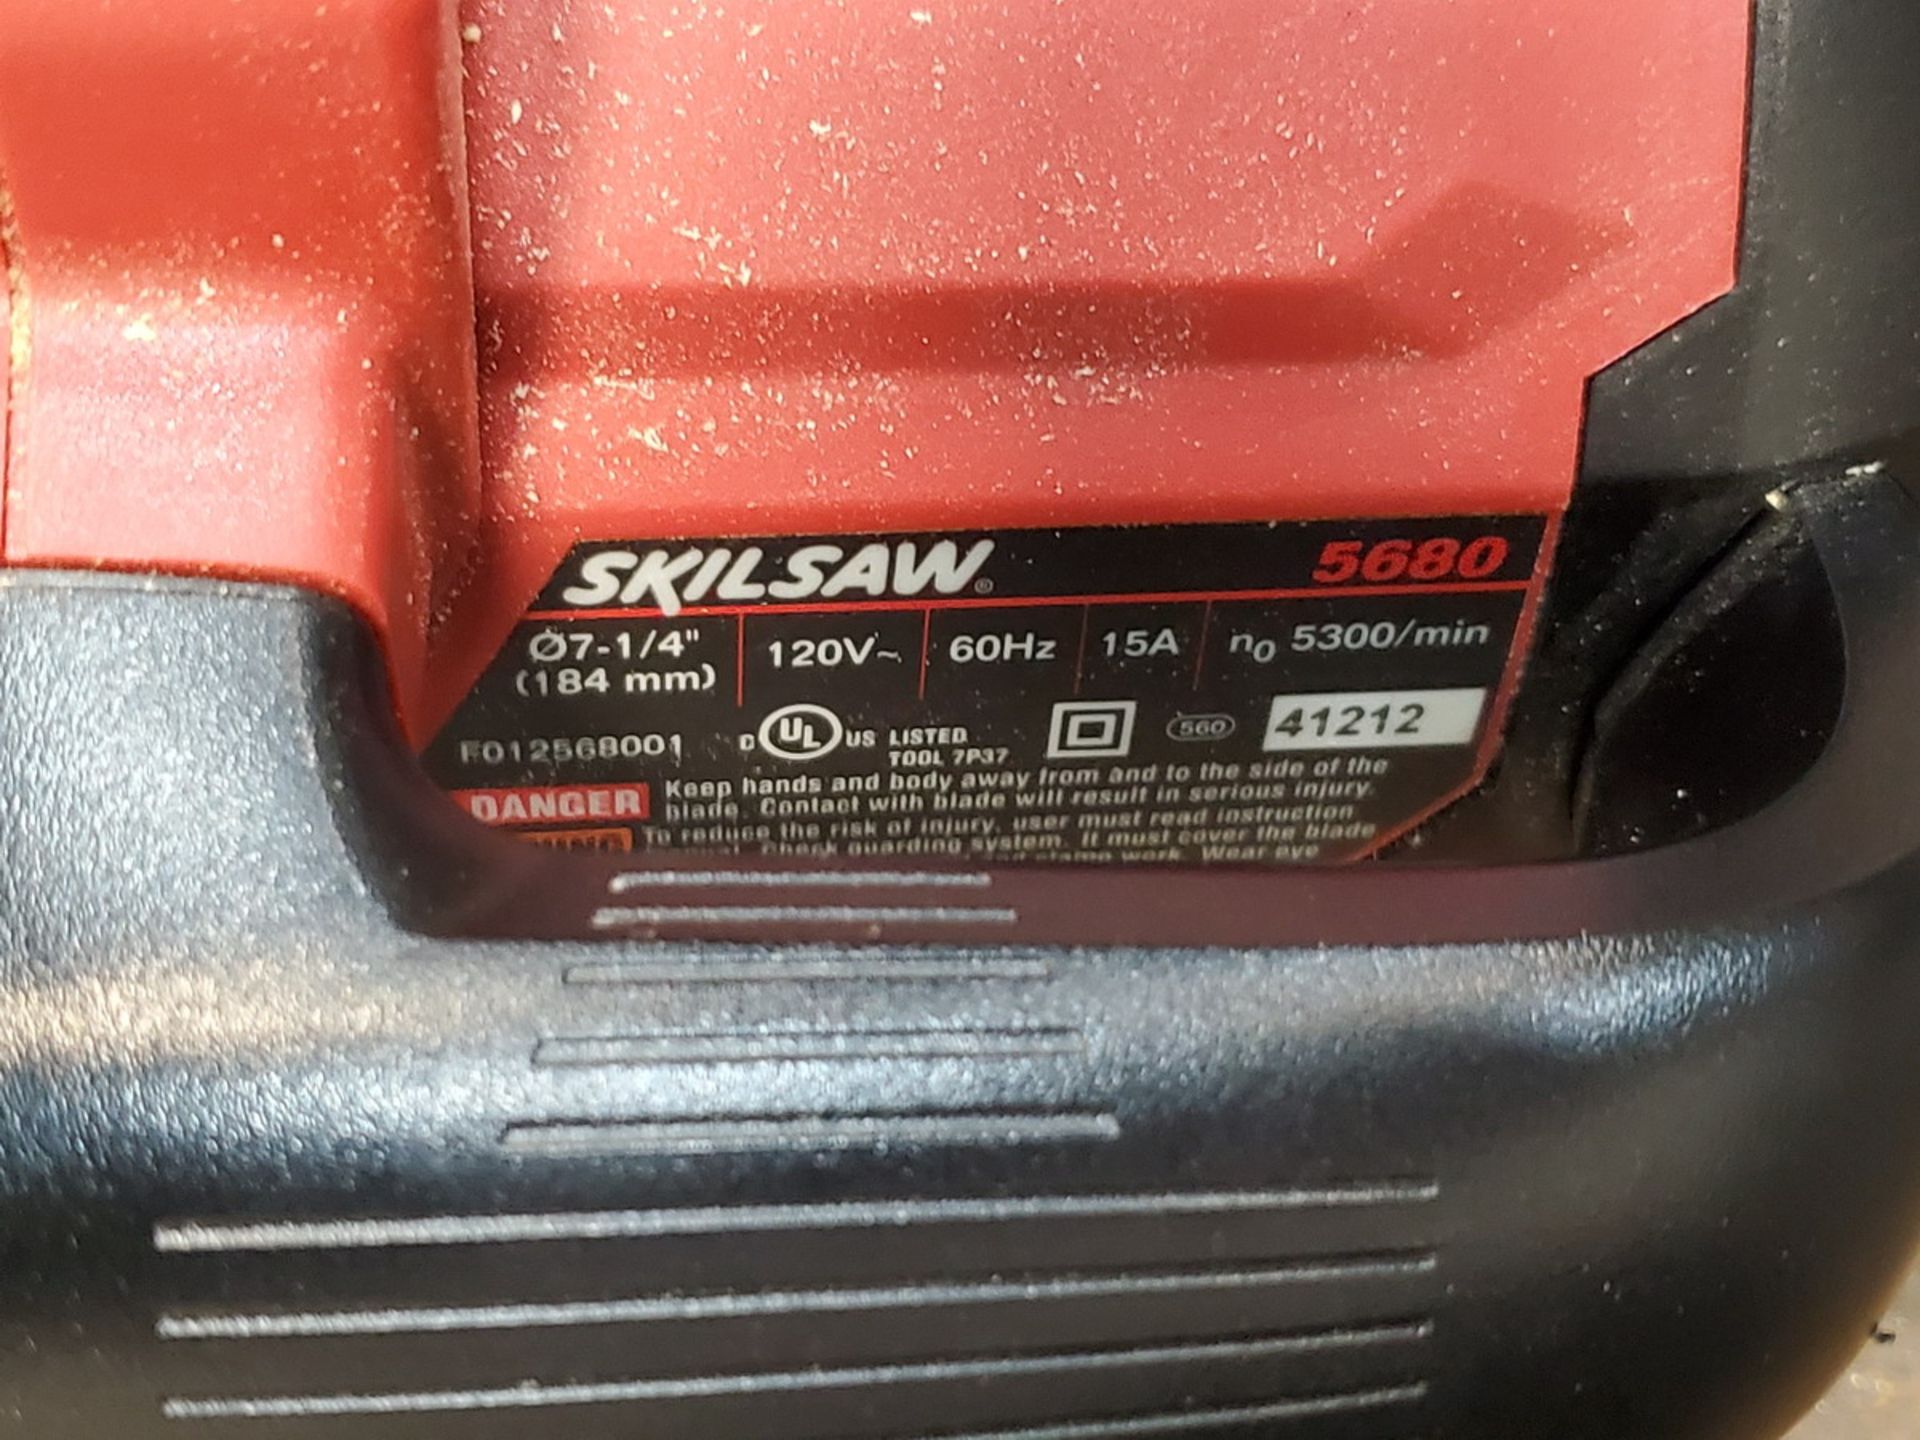 Skilsaw 7-1/4" Circular Saw W/ Laser 120V, 15A, 60HZ, 5300/min - Image 7 of 7